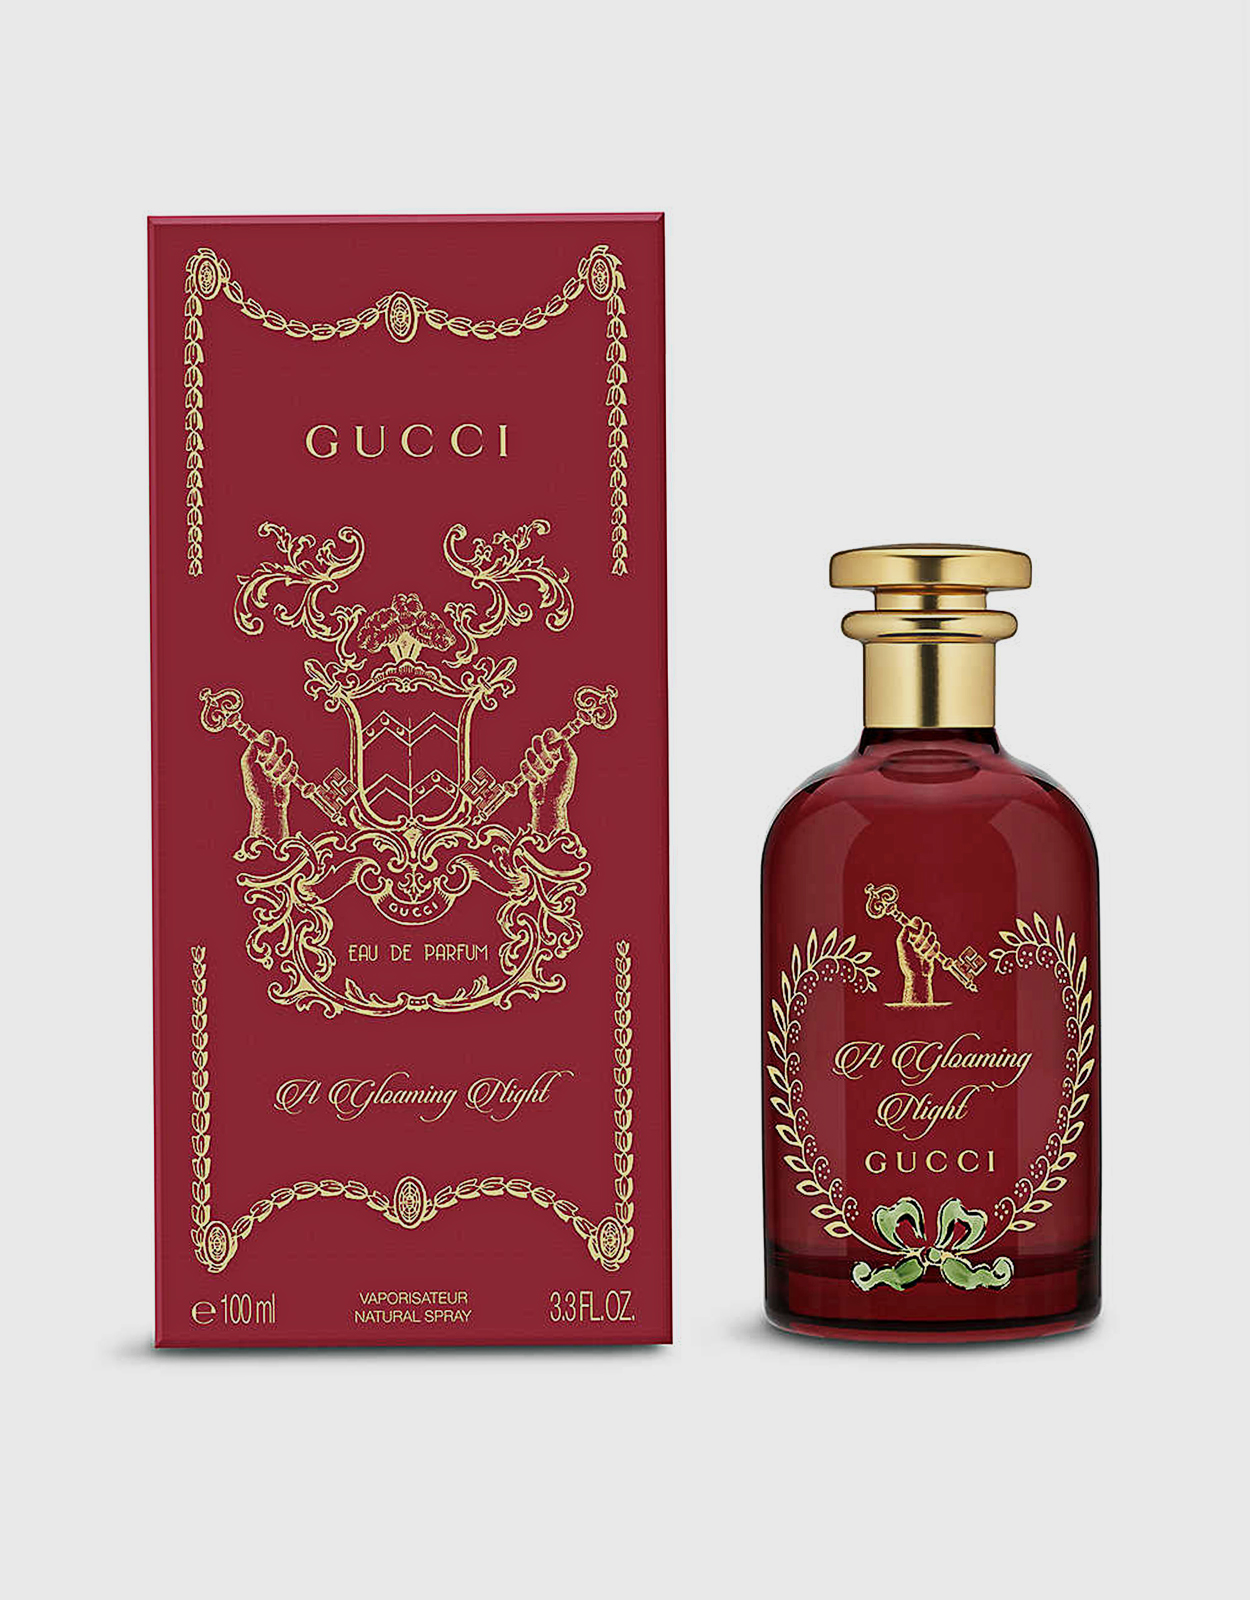 Gucci Beauty The Alchemist's Garden A Gloaming Night Eau De Parfum 100ml  (Fragrance,Women)